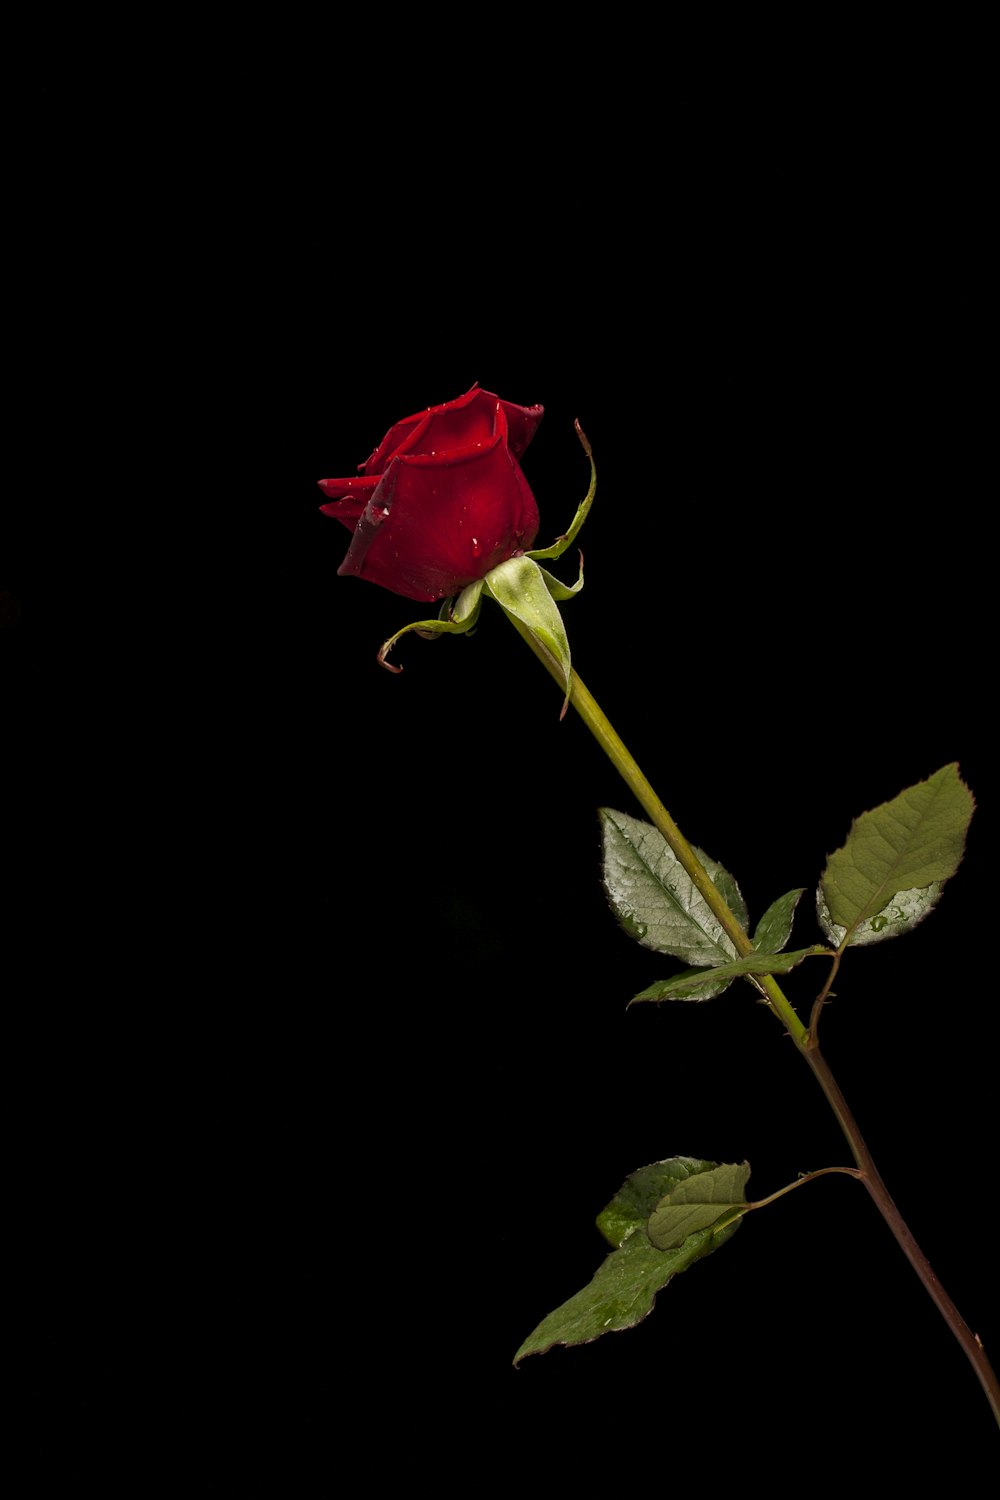 1000+ Rose In Black Background Pictures | Download Free Images on Unsplash